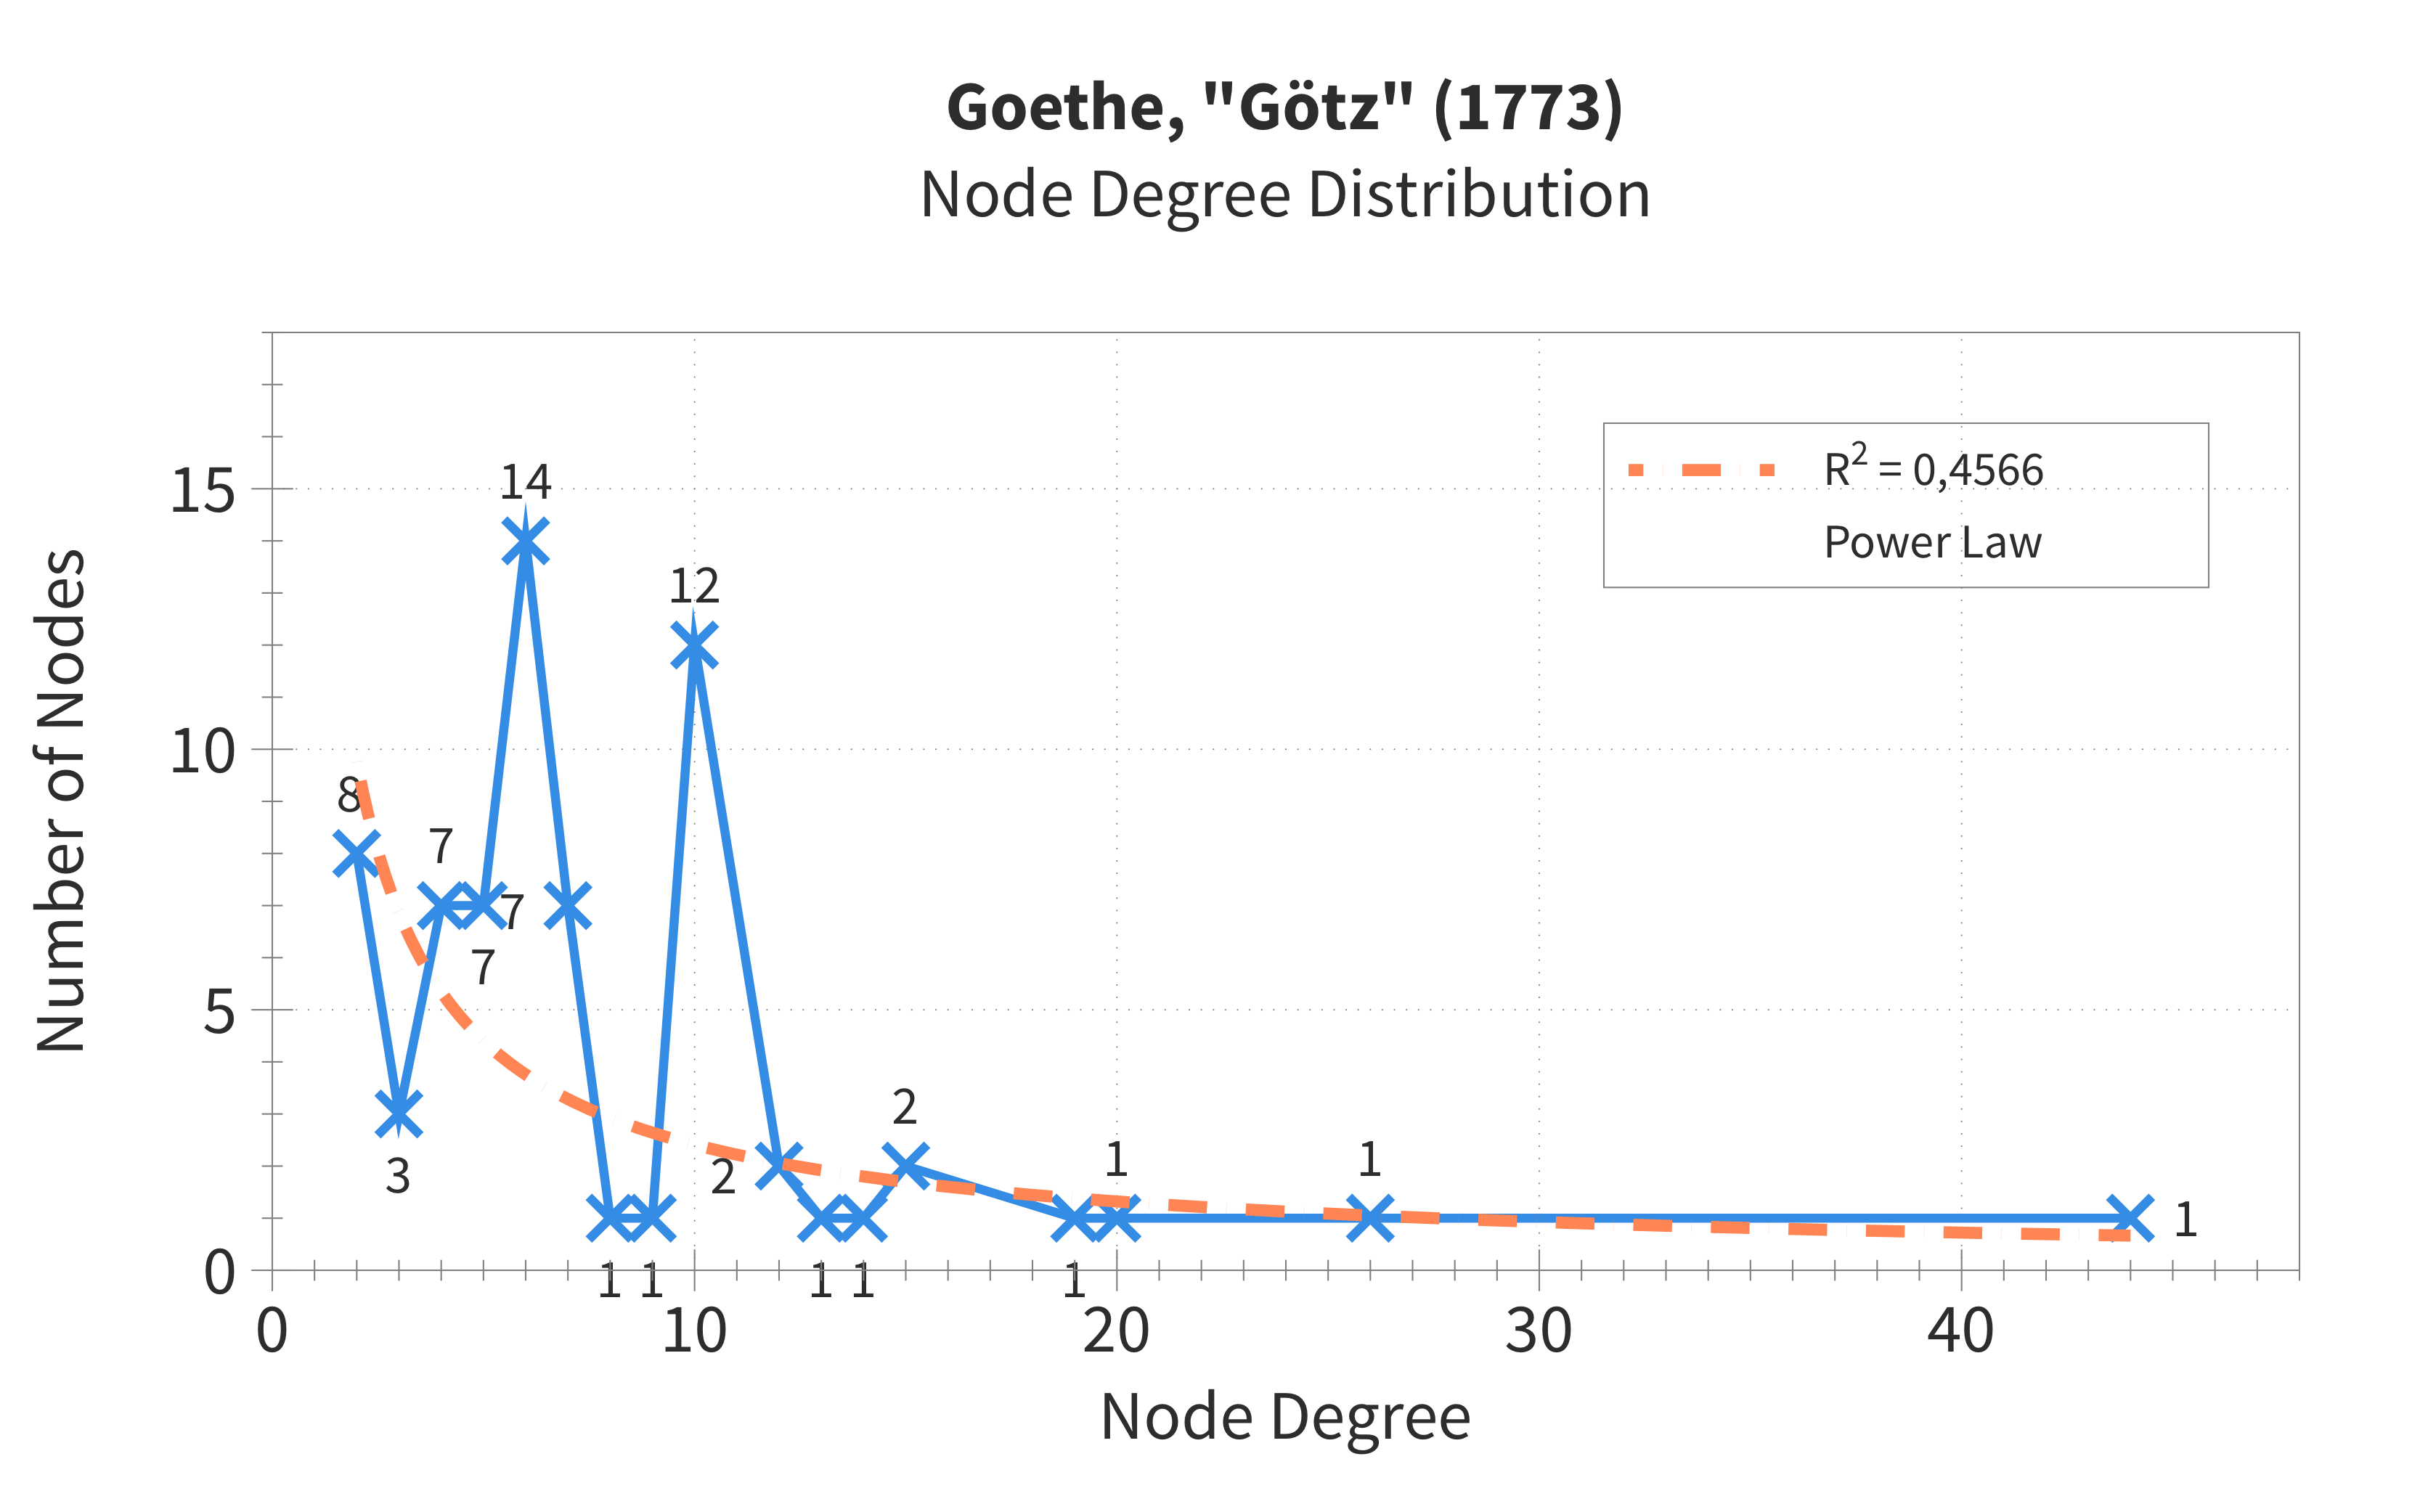 node-degree distribution in Goethes 'Götz